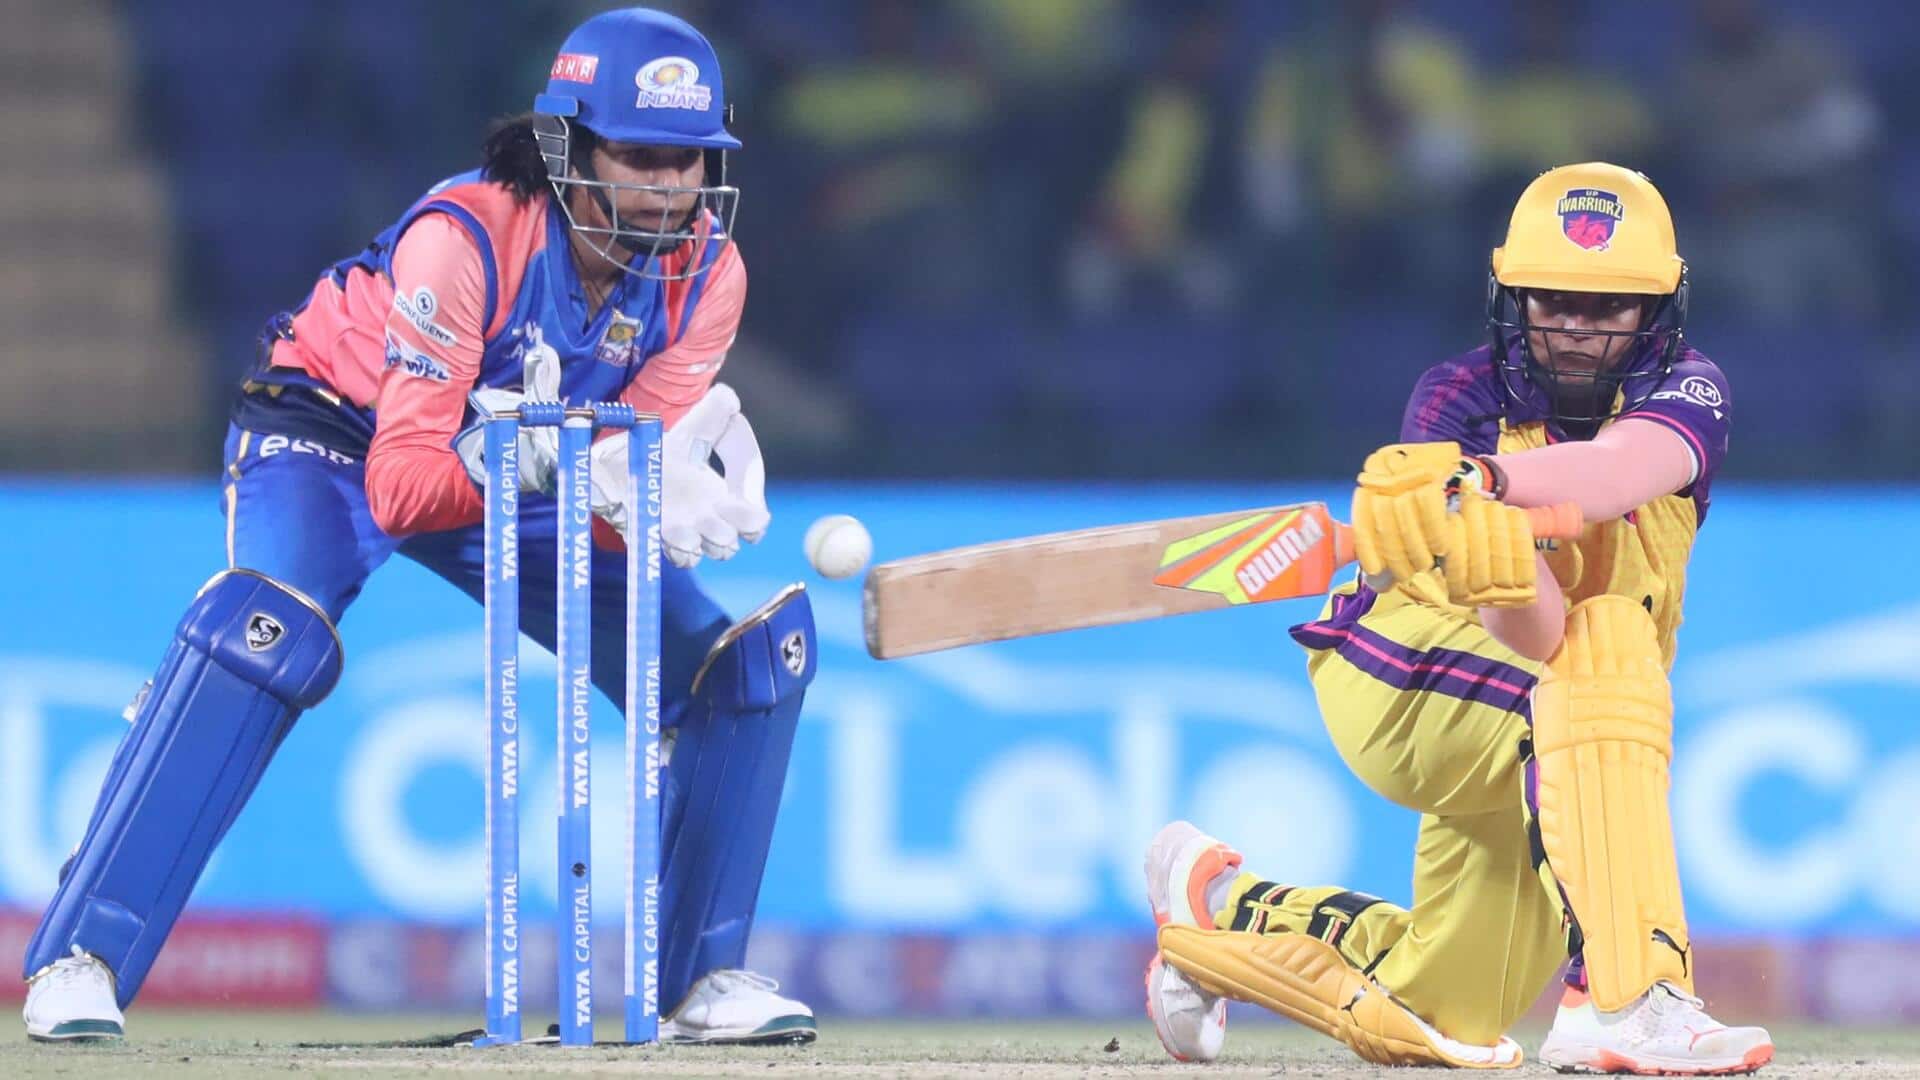 Deepti Sharma slams her maiden WPL half-century: Key stats